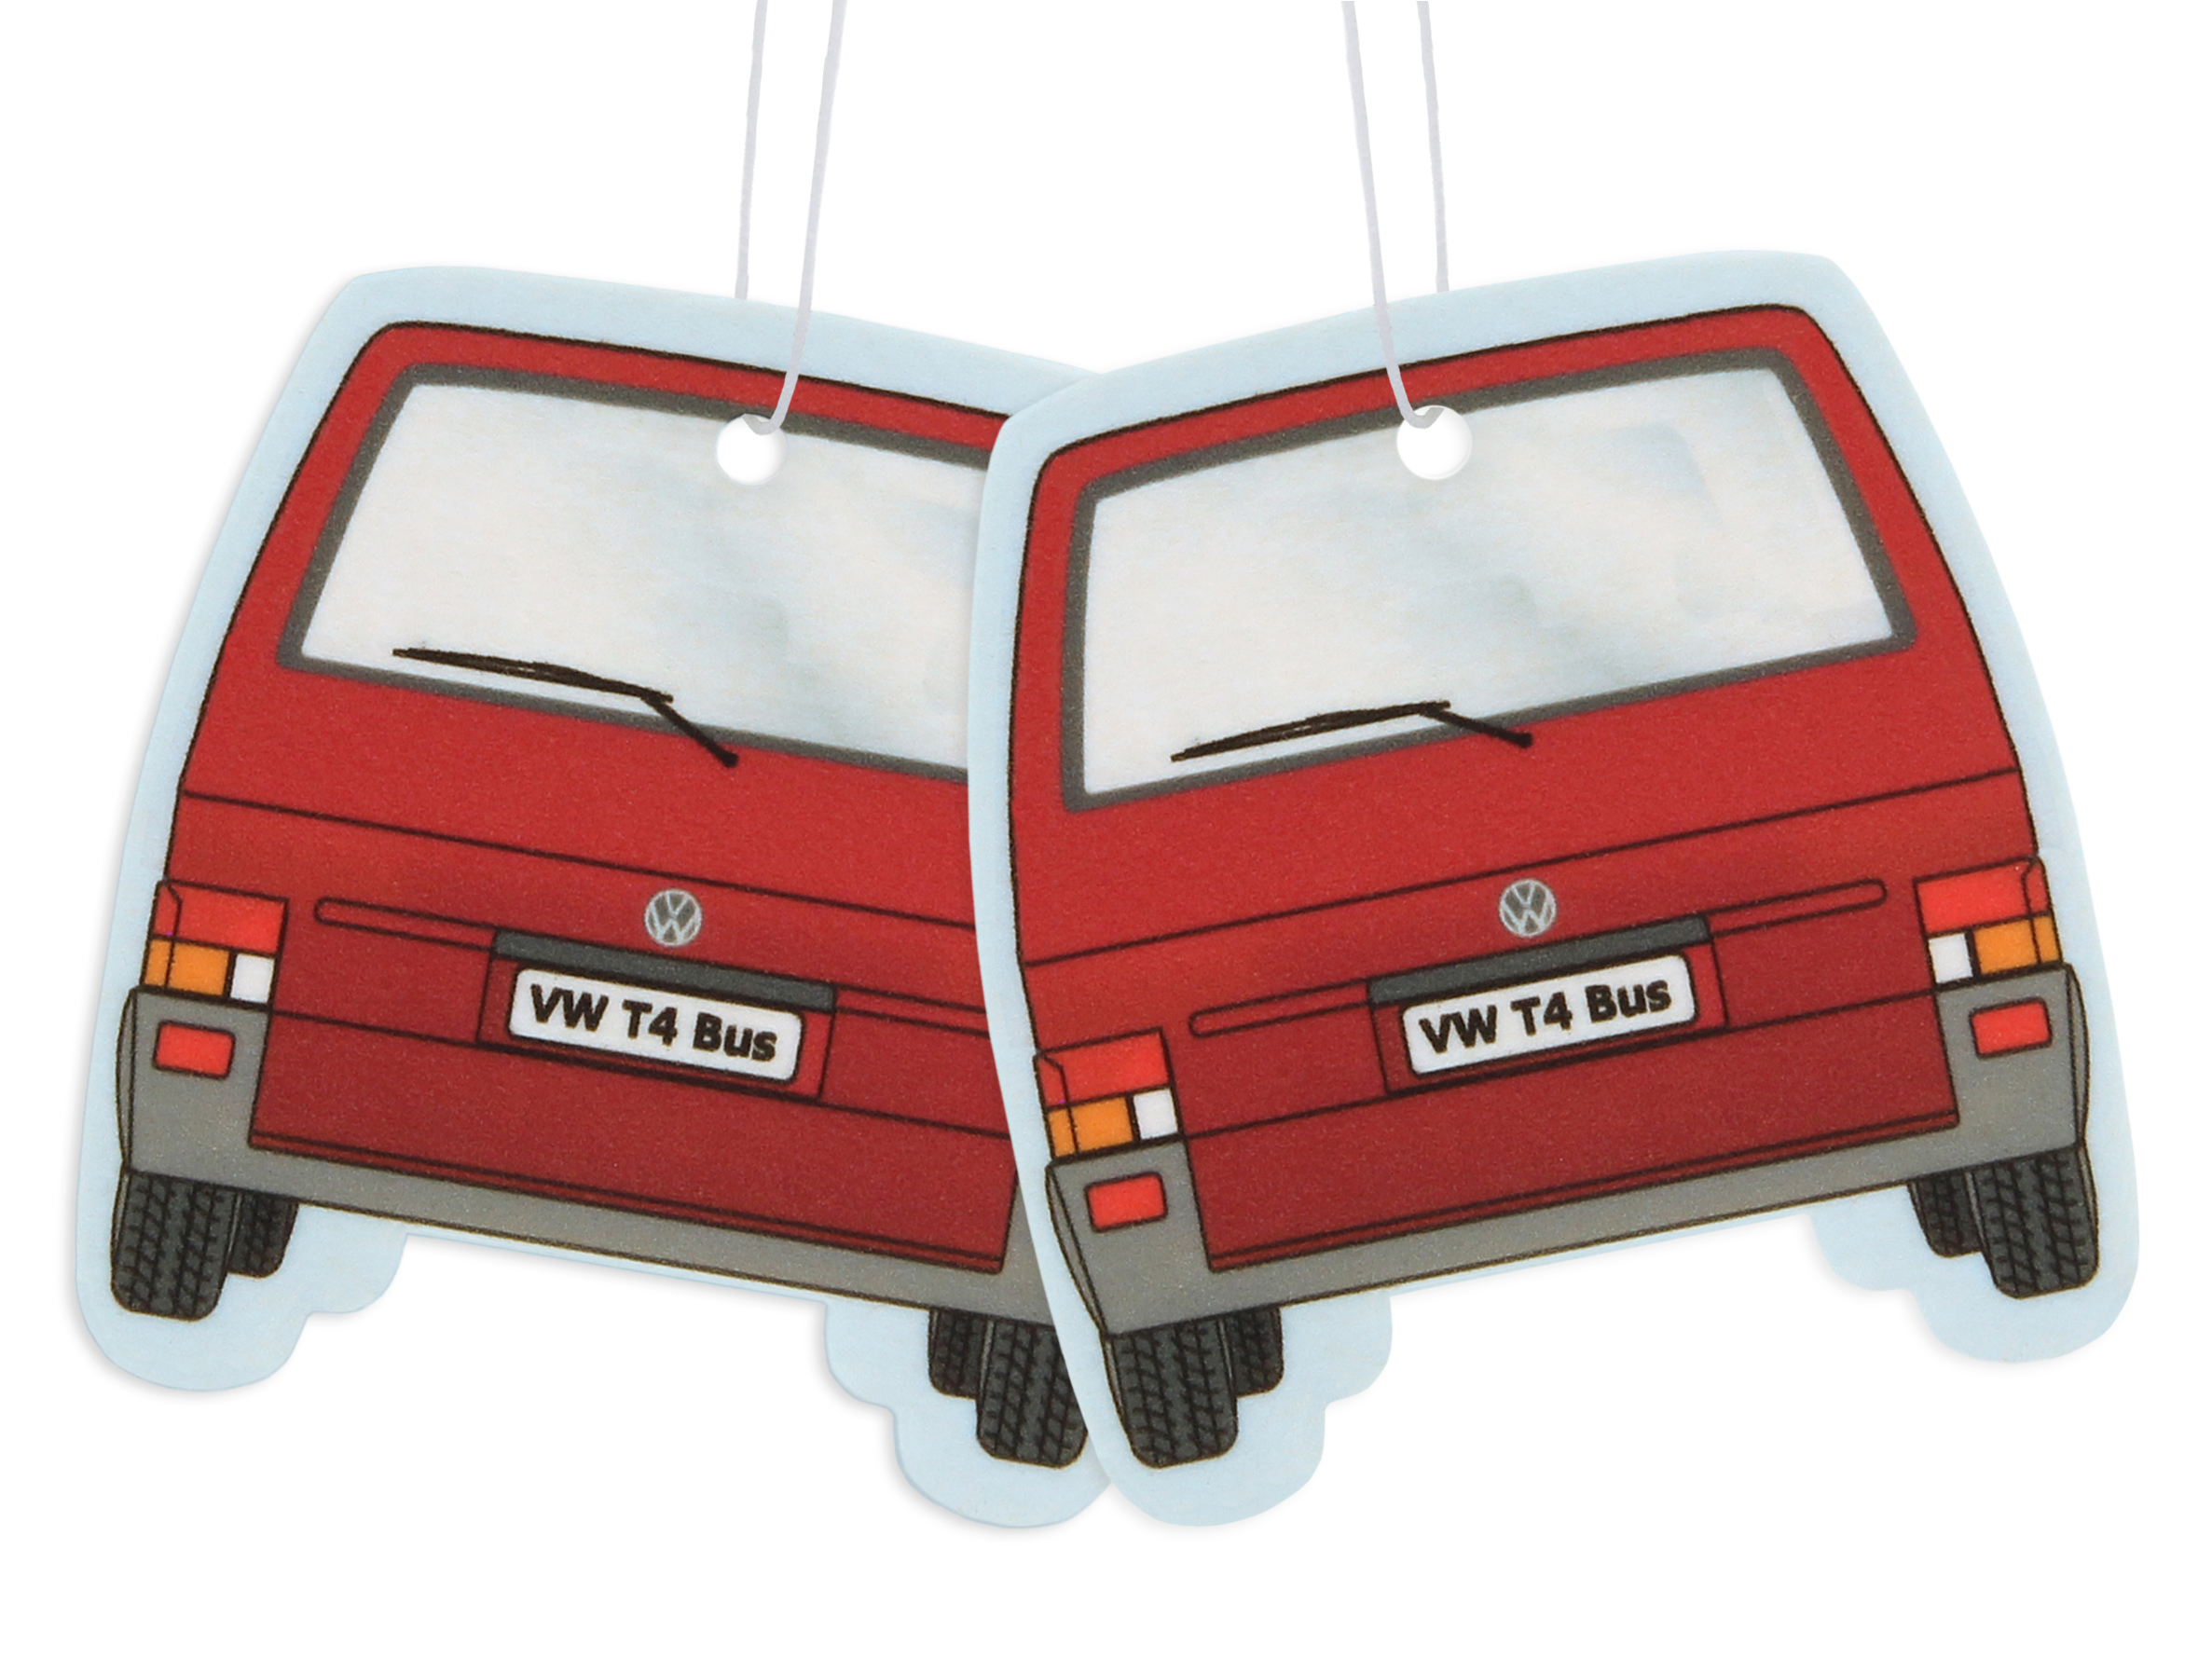 VW T4 Bus Front Lufterfrischer 2er Set 